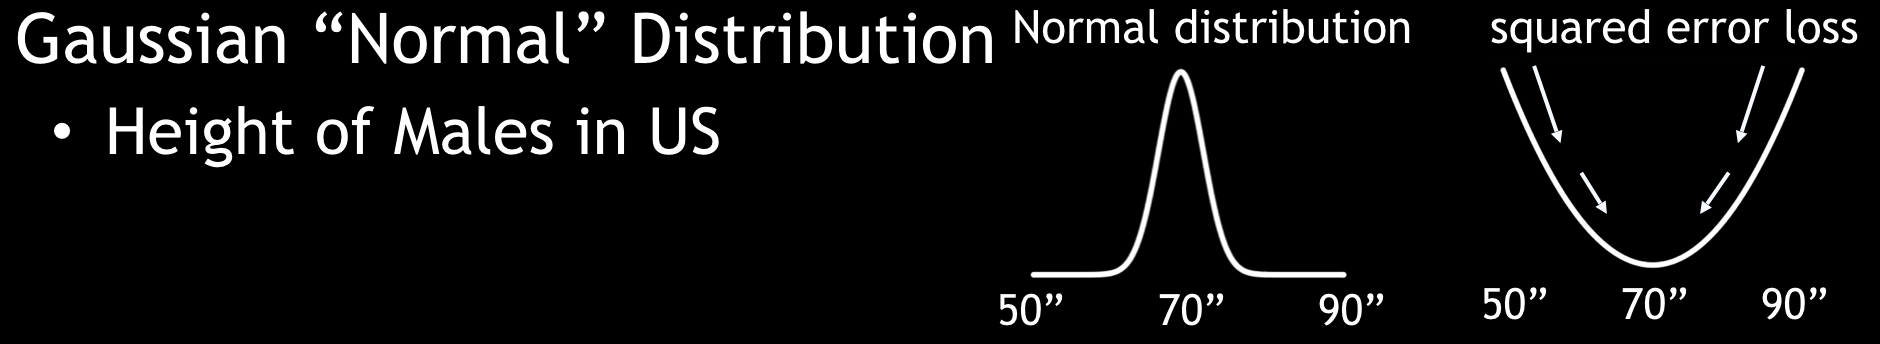 Gaussian distribution